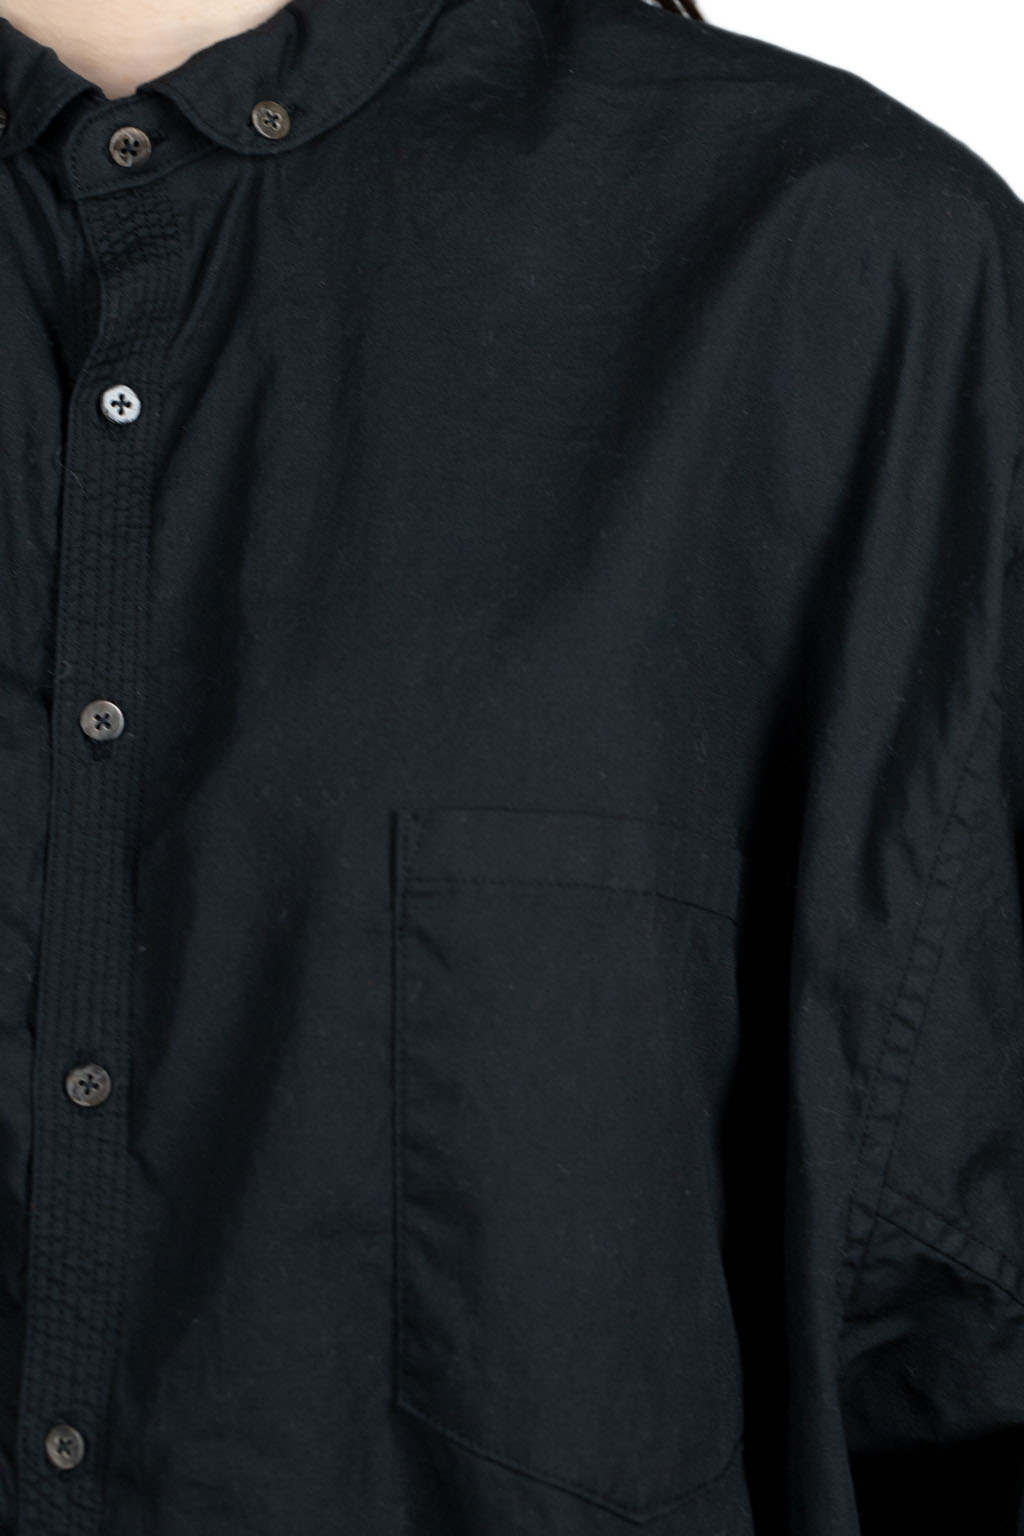 Kapital Broad Cloth Button Down GIANT Shirt - Black